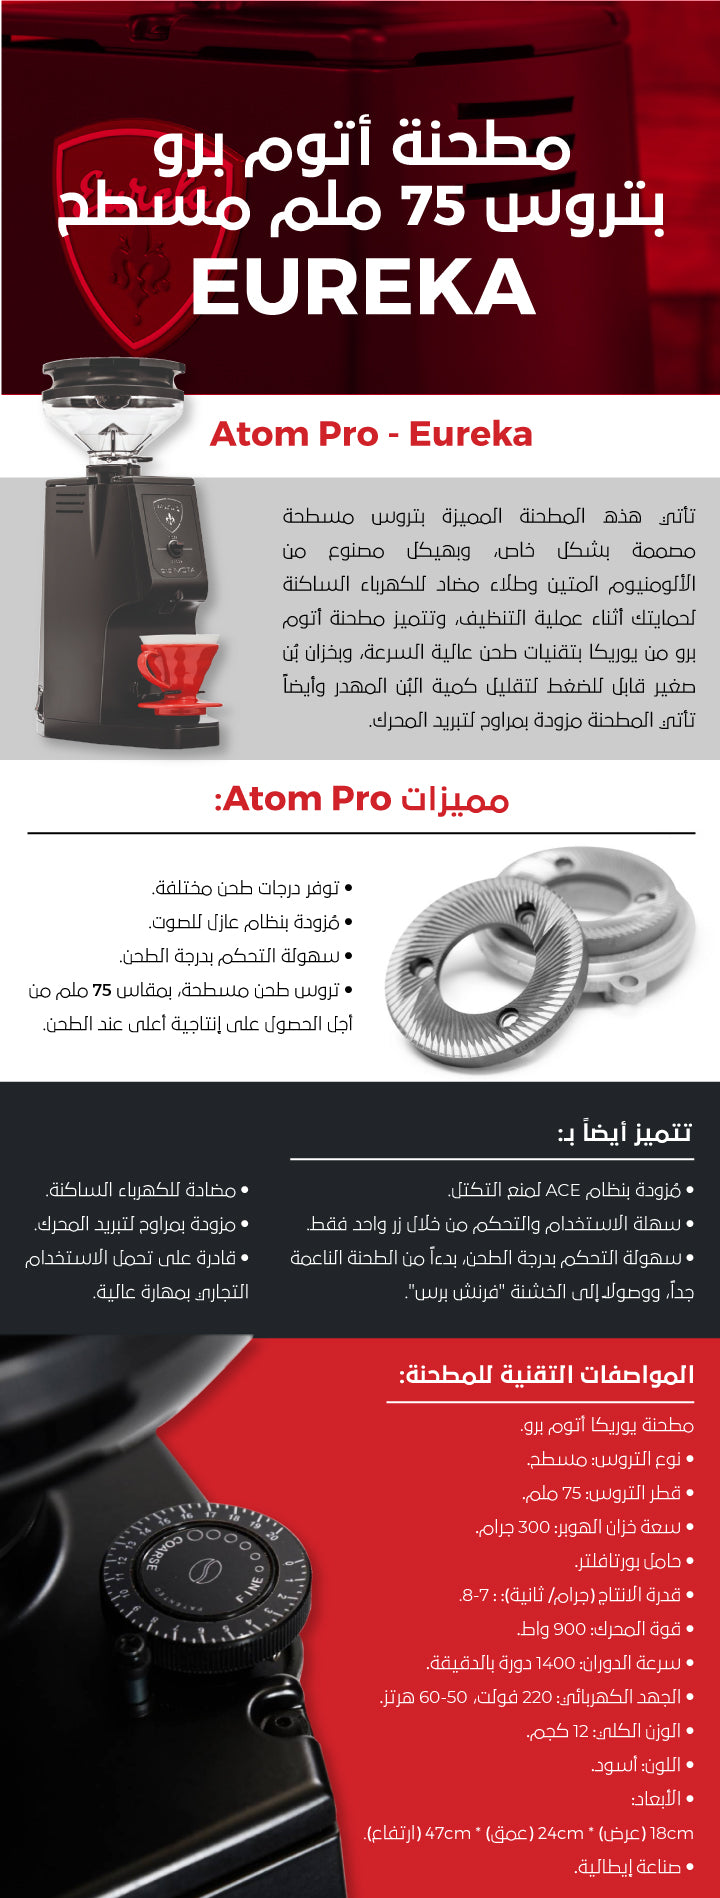 Atom pro